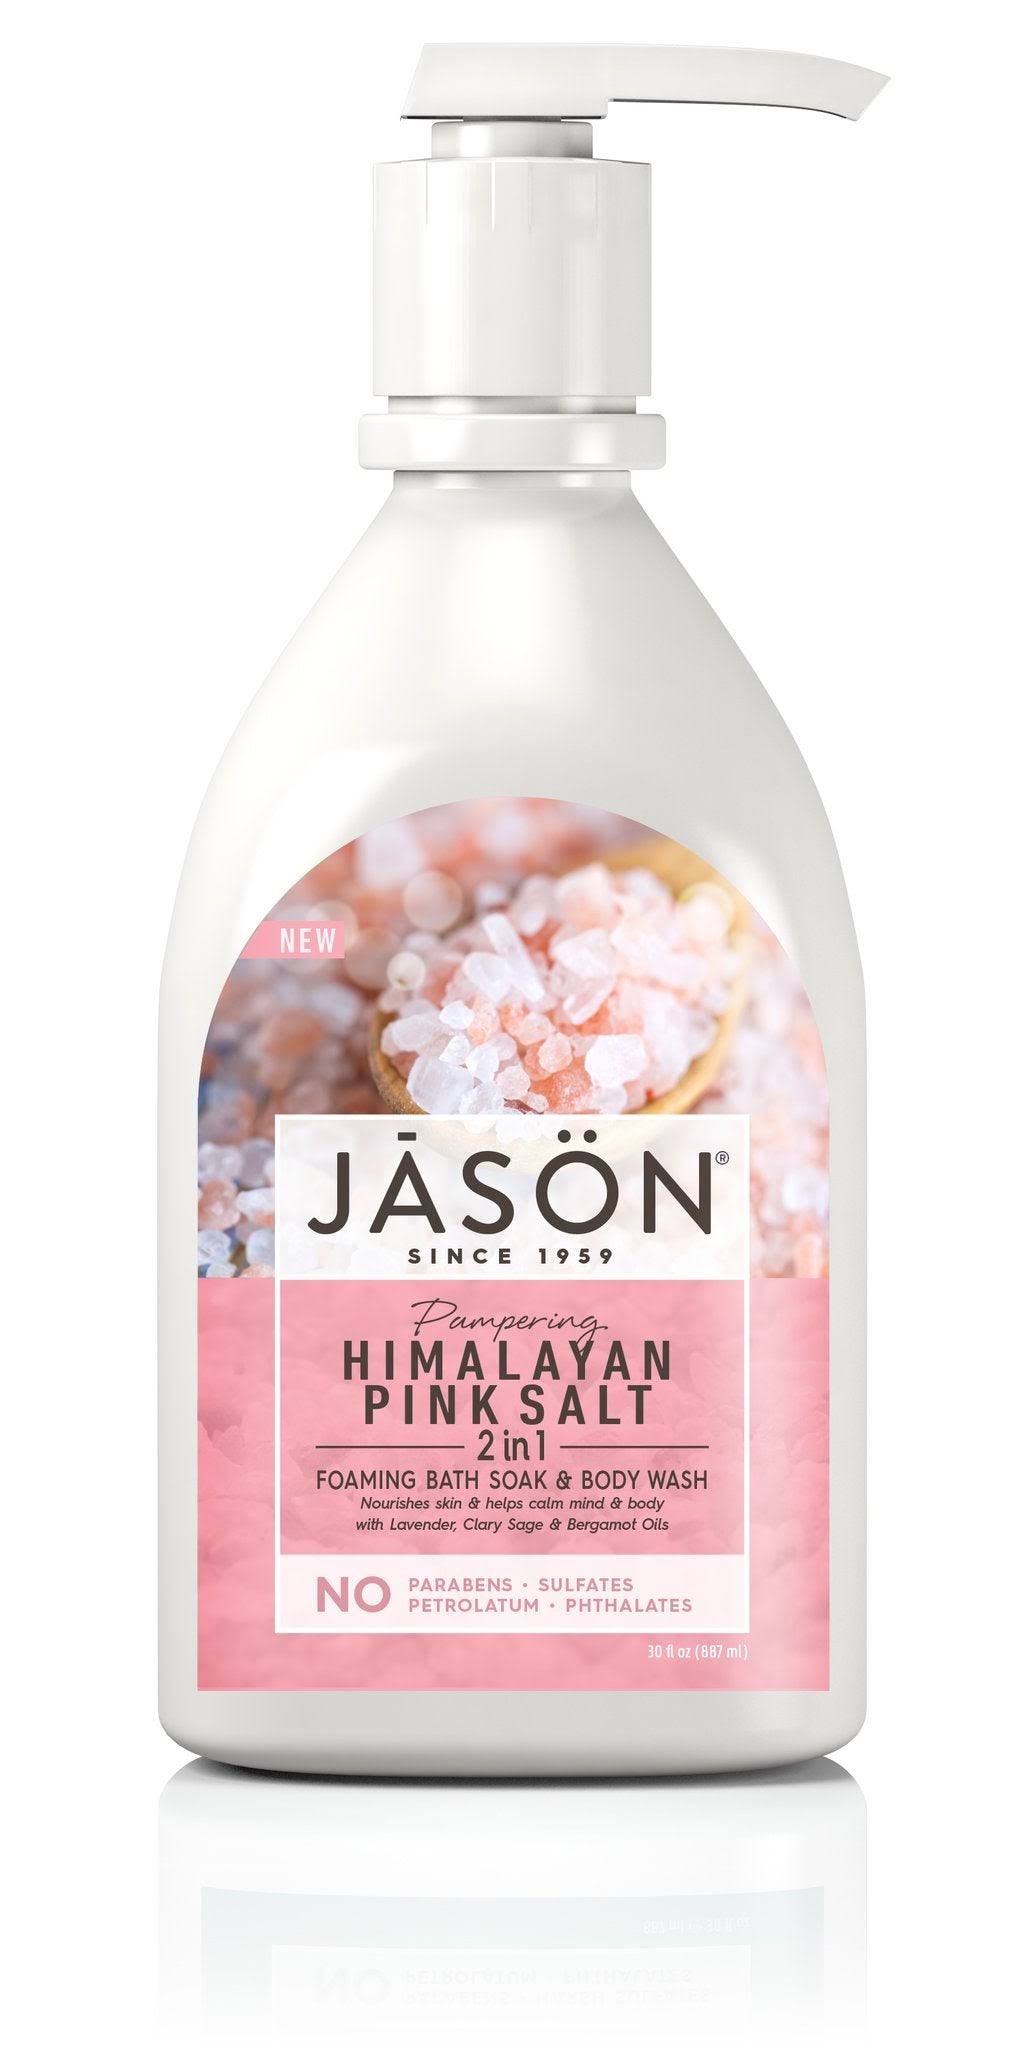 Jason Himalayan Pink Salt Body Wash - 30oz